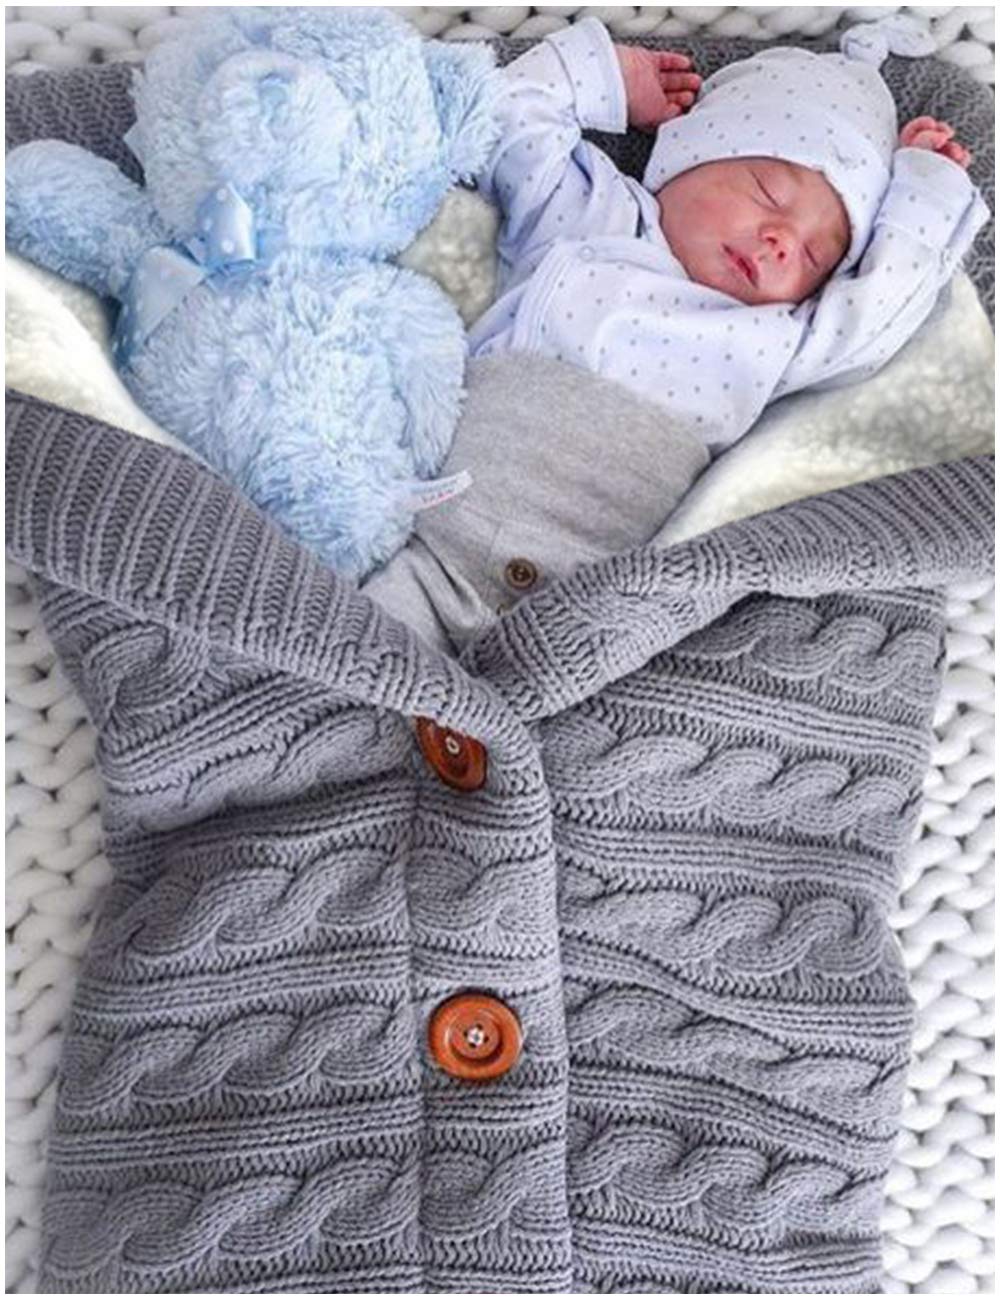 Baby Winter Knitting Sleeping Bag